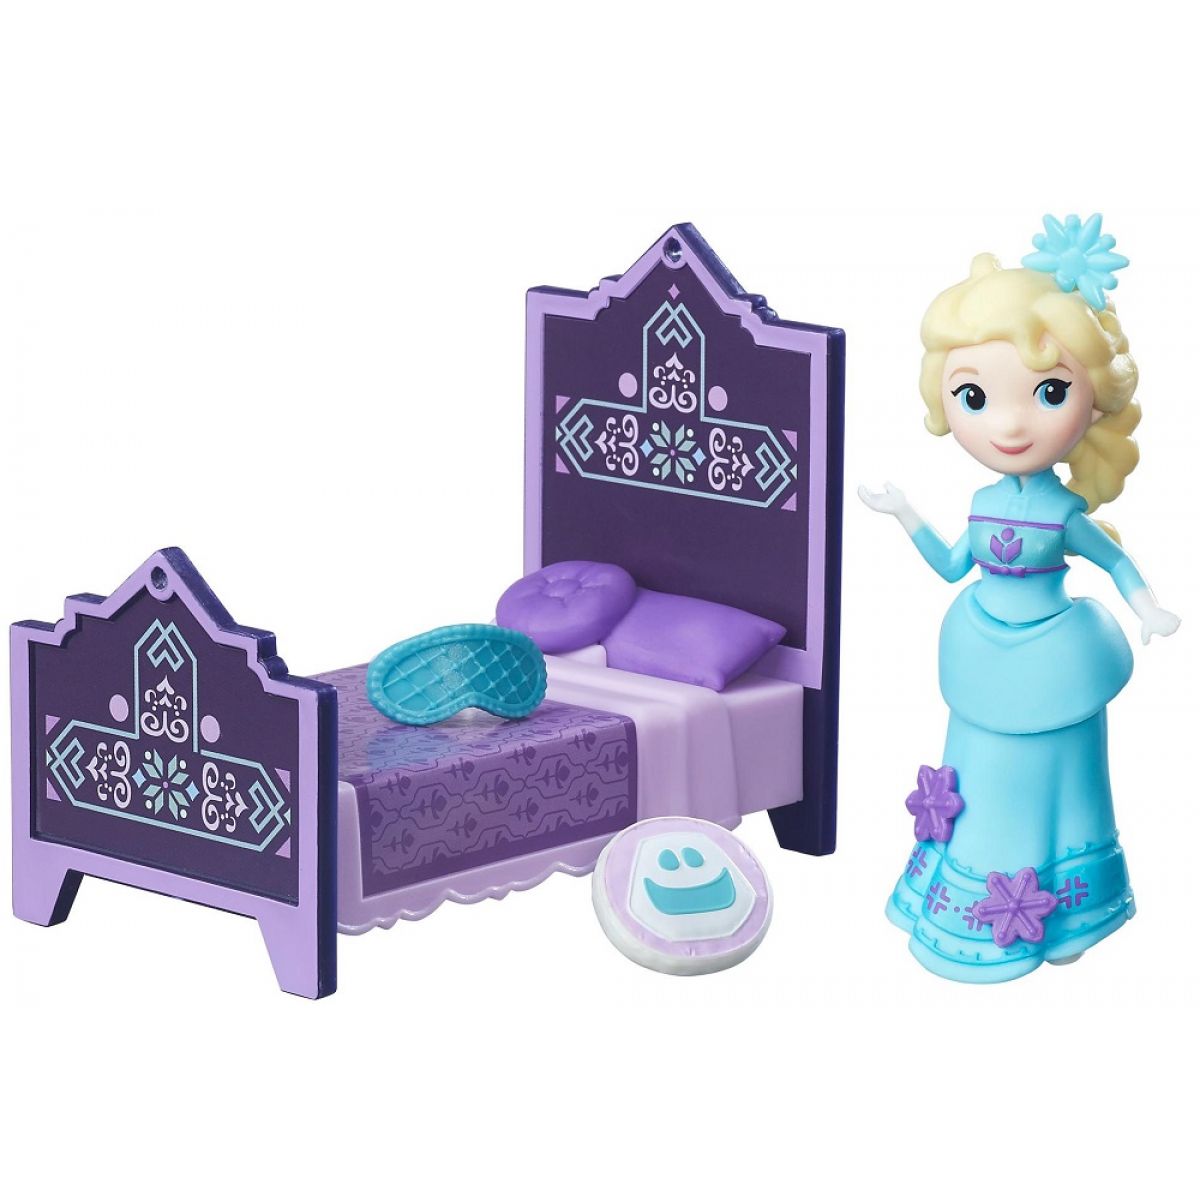 Hasbro Disney Frozen Little Kingdom Mini panenka s doplňky Rise & Shine Elsa